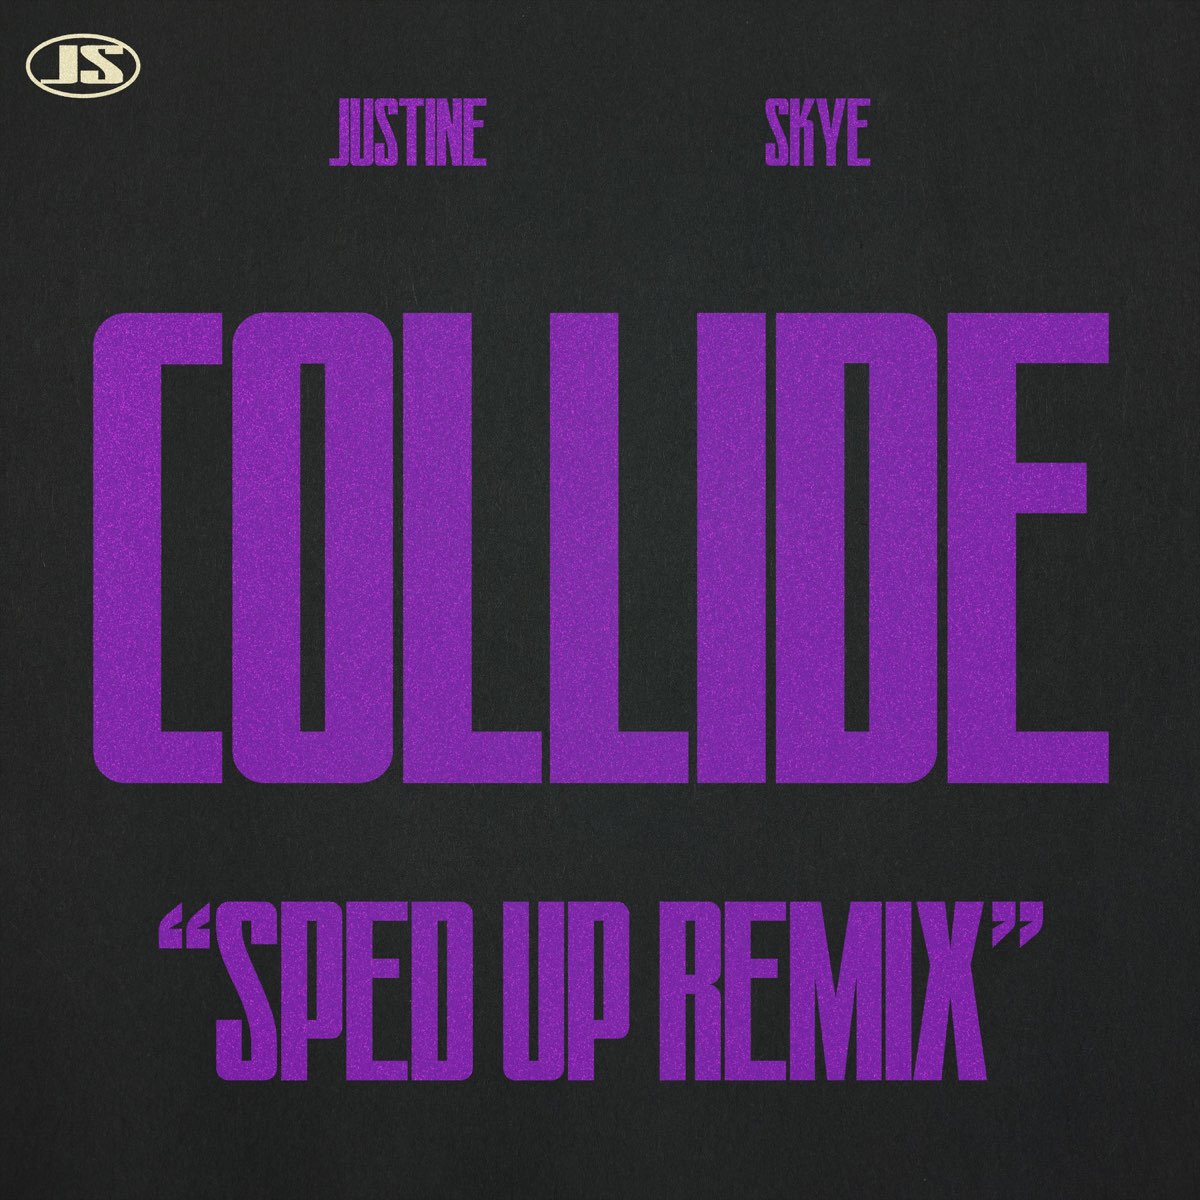 Speed up песни полностью. Collide Justine Skye. Collide Justine Skye feat Tyga. Justine Skye Collide feat. Tyga Speed. Tyga ft Collide Justine.